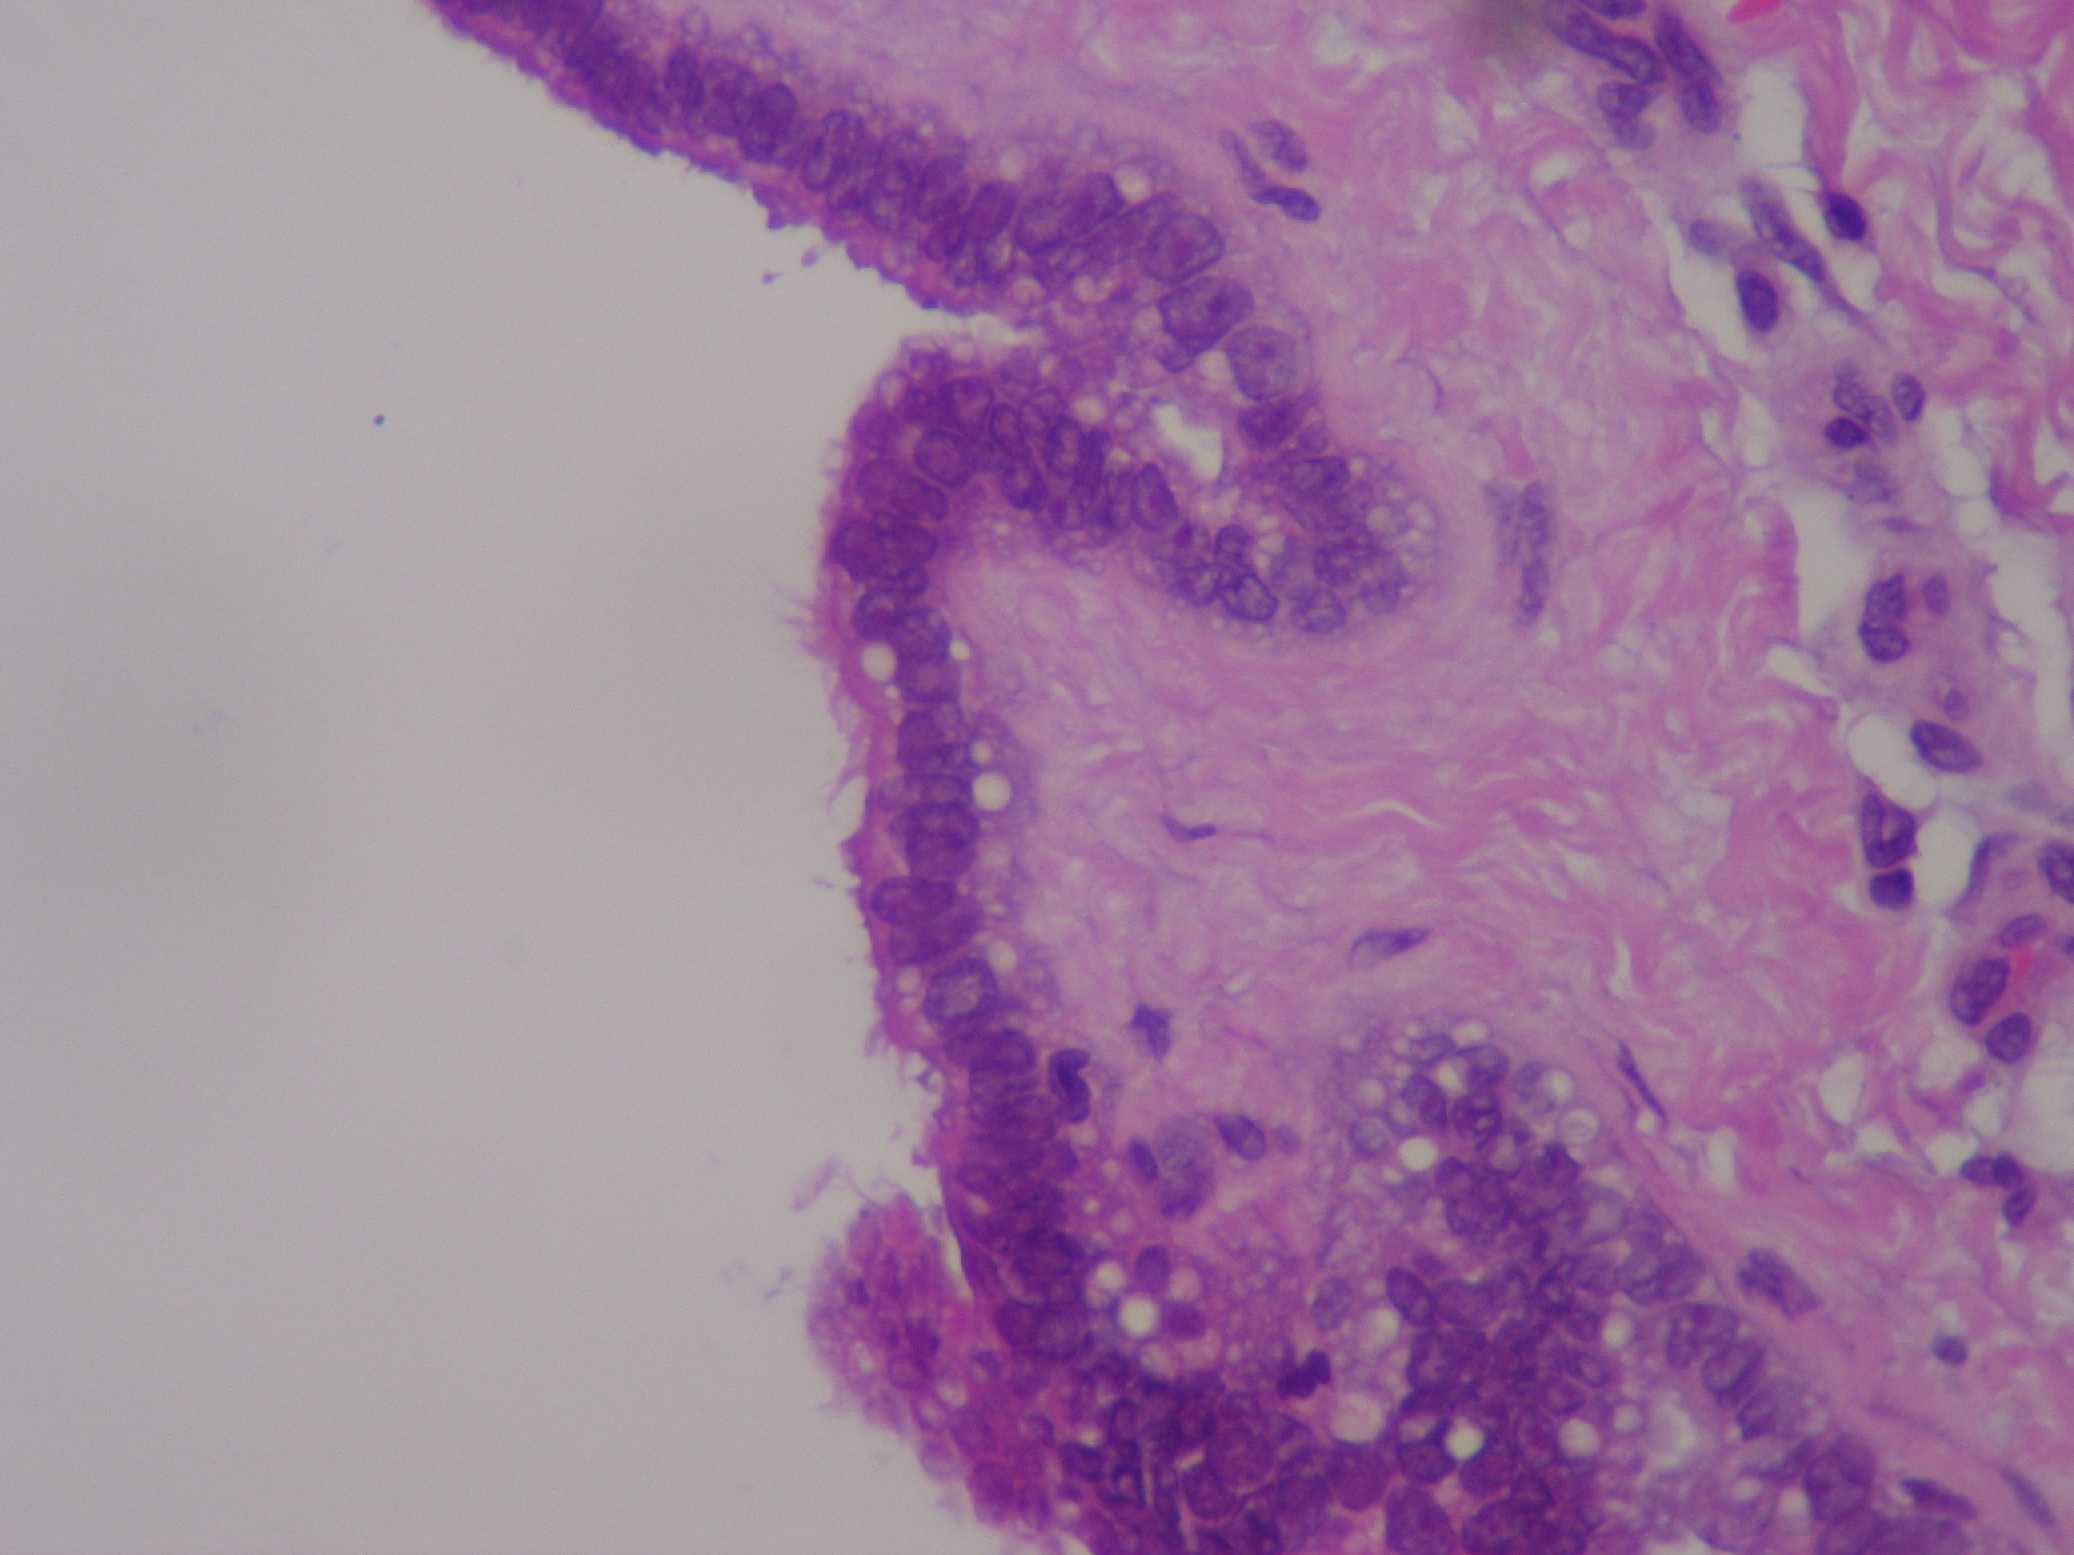 Imagen de Lesin qustica cutnea en nalga / Cutanous cystic lesion in buttock